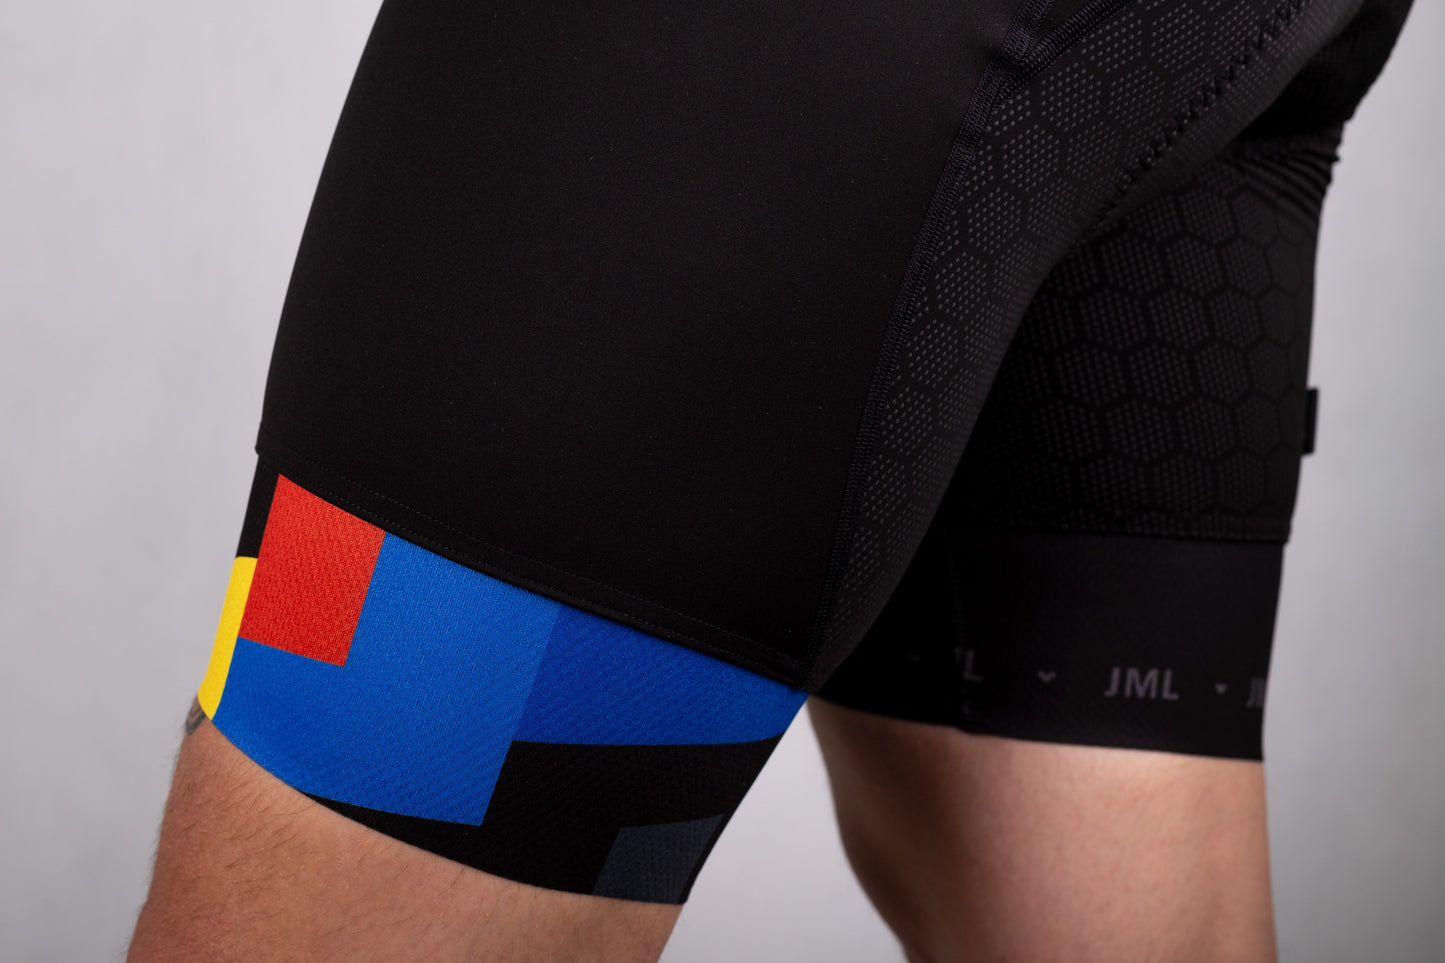 JML Shapes 2.0 Bib Shorts - Jerseys Made with Love